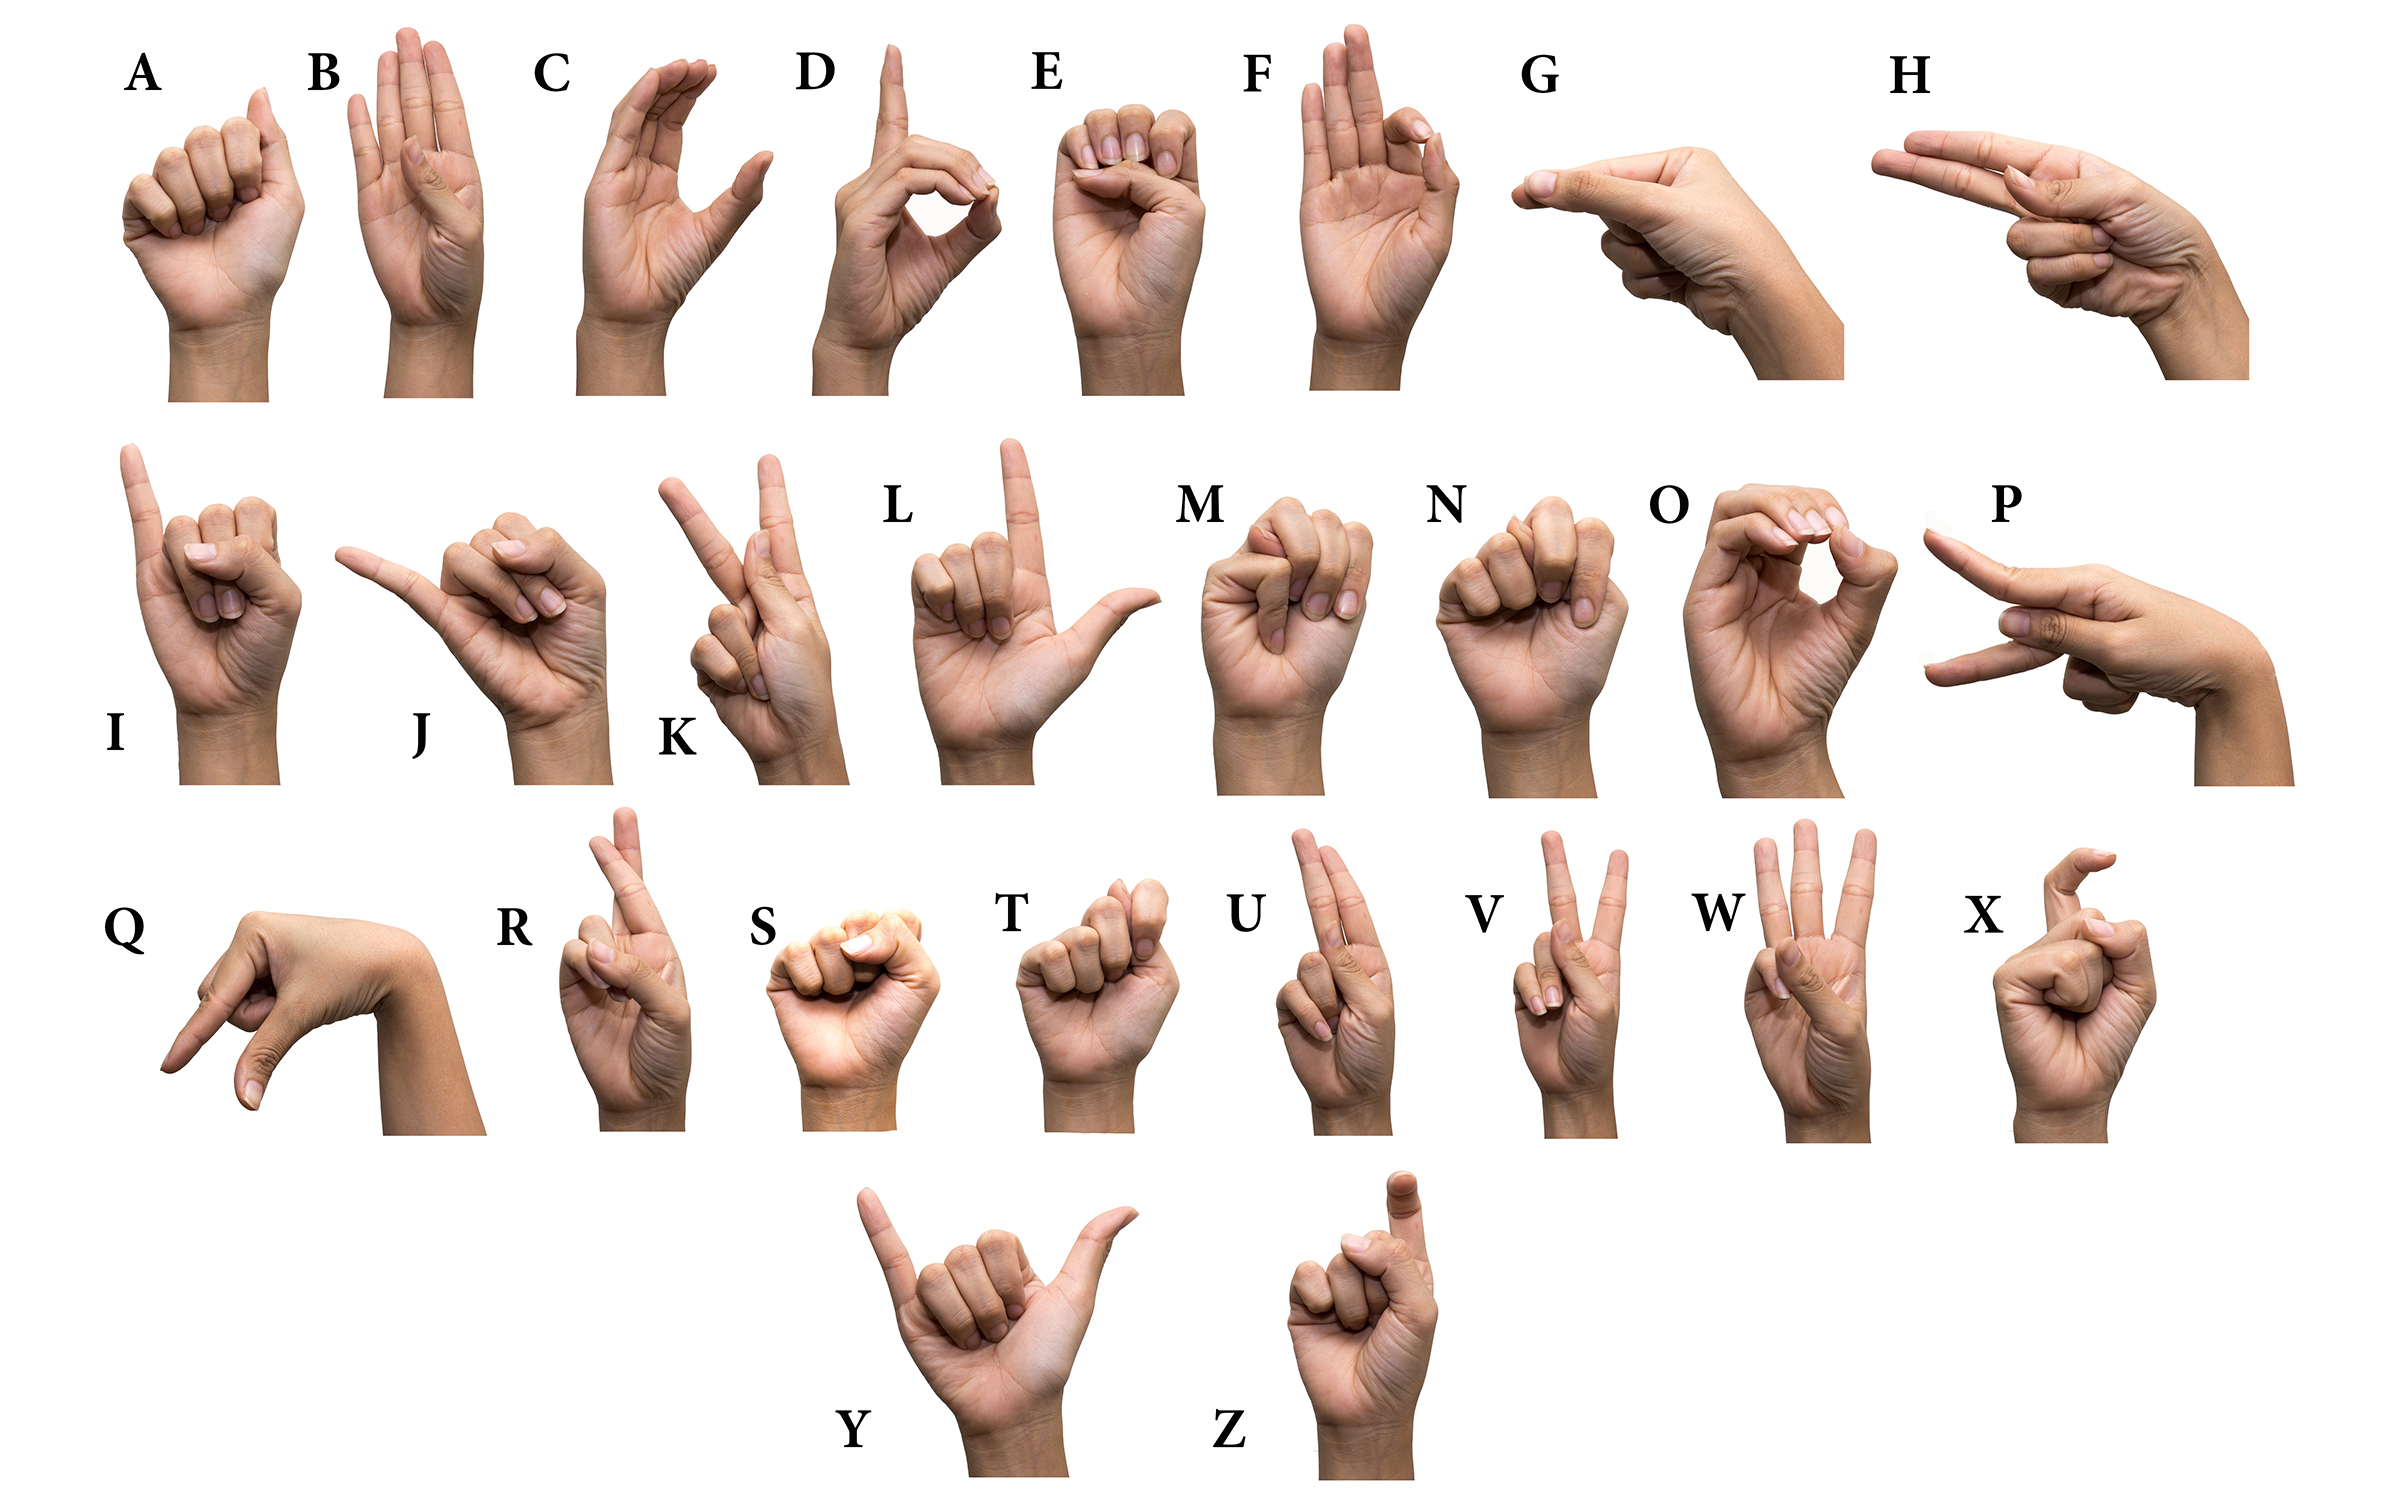 Буквы глухонемых. Американский дактильный алфавит. Язык жестов. Язык жестов английский. Азбука для глухонемых на пальцах.